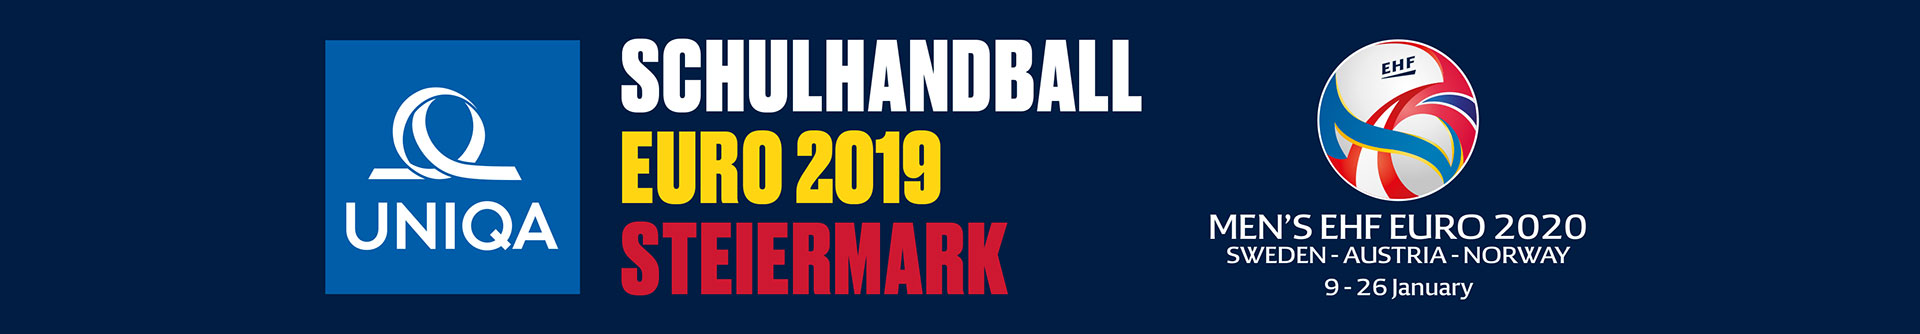 Schulhandball Euro 2019 Steiermark